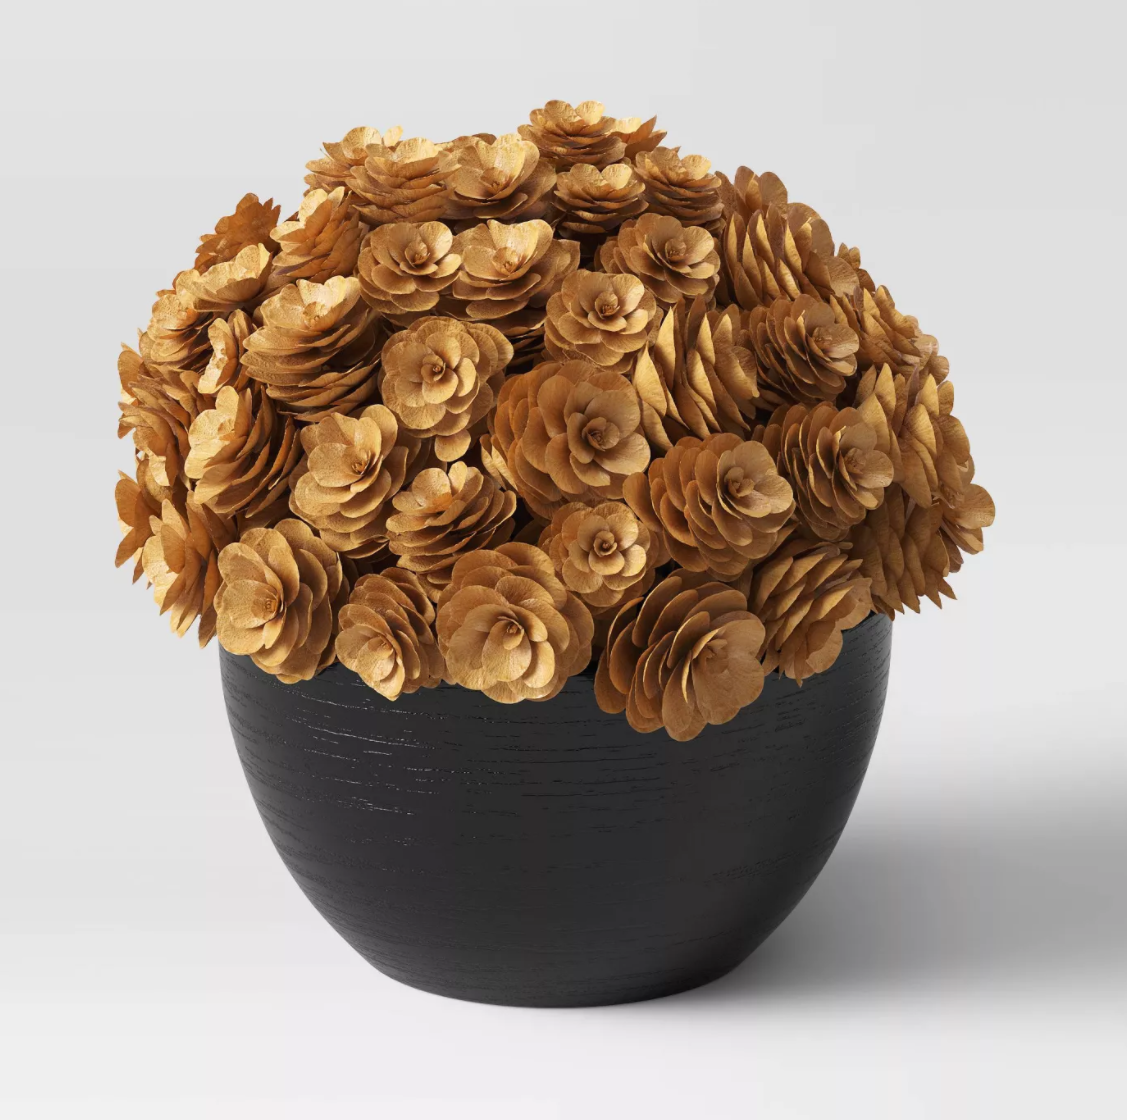 target-pinecone-black-wood-arrangement-floral-fall-decor.PNG